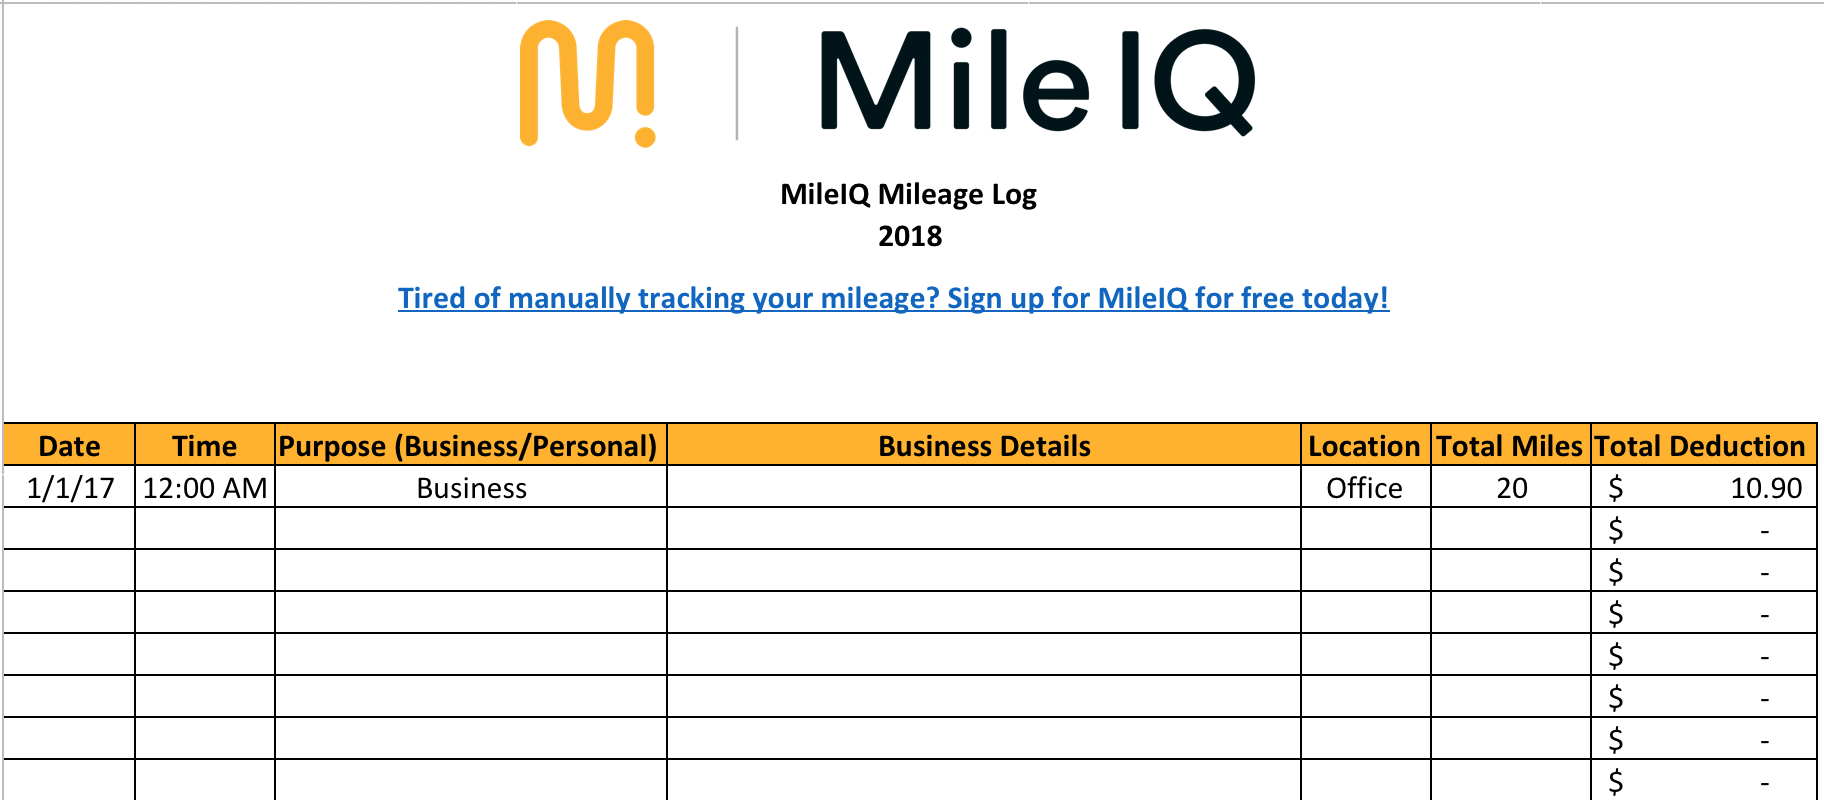 Mileage Tracker Spreadsheet